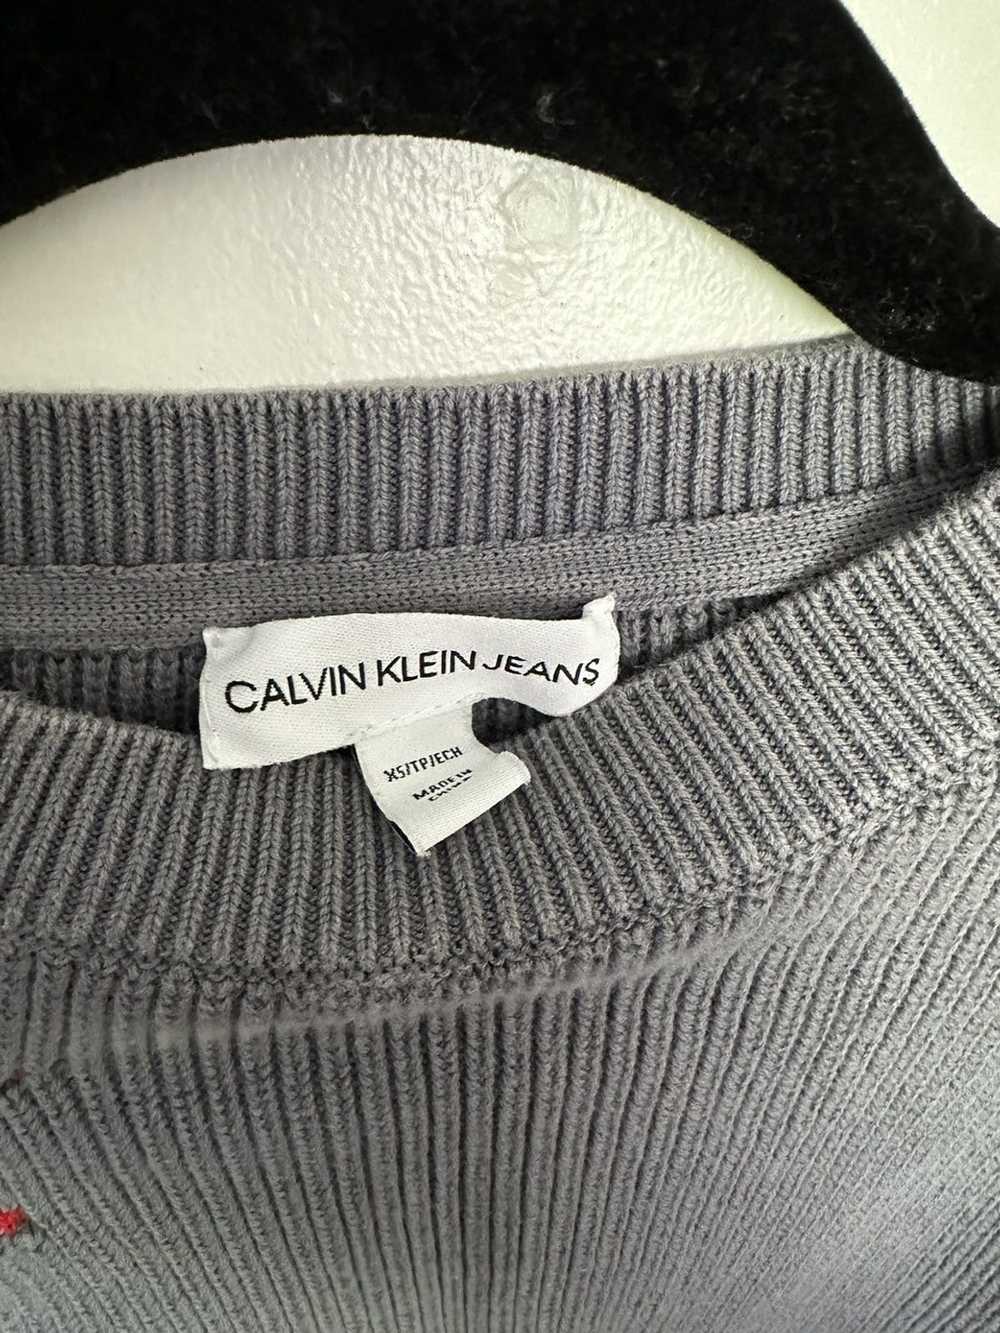 Calvin Klein Calvin Klein Stars - image 4